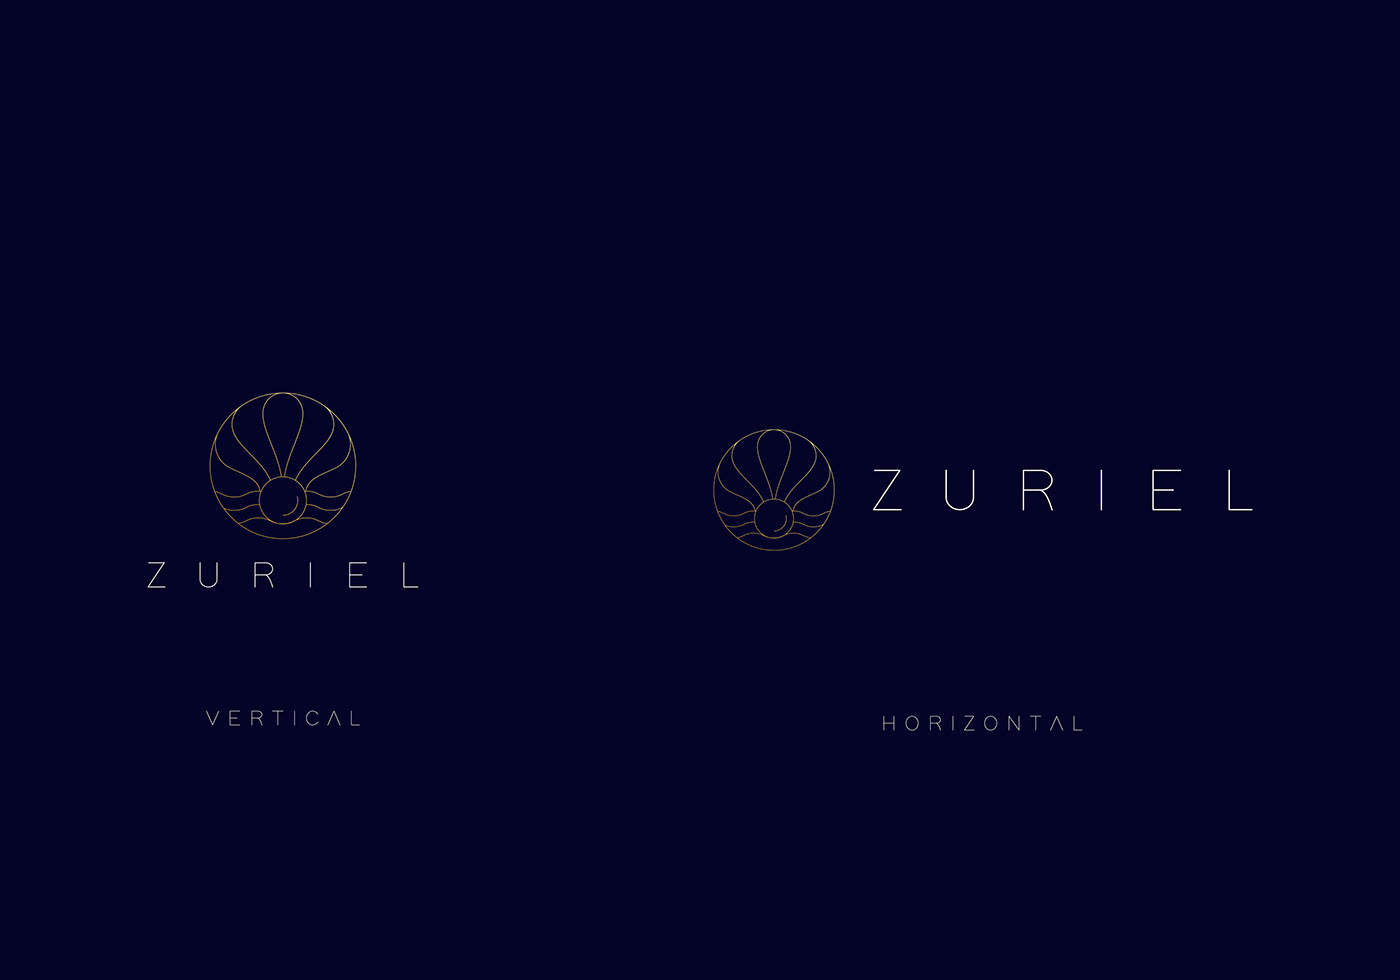 design brand identity logos luxury jewelry minimalist modern Creative Design Social media post pearl jewellery